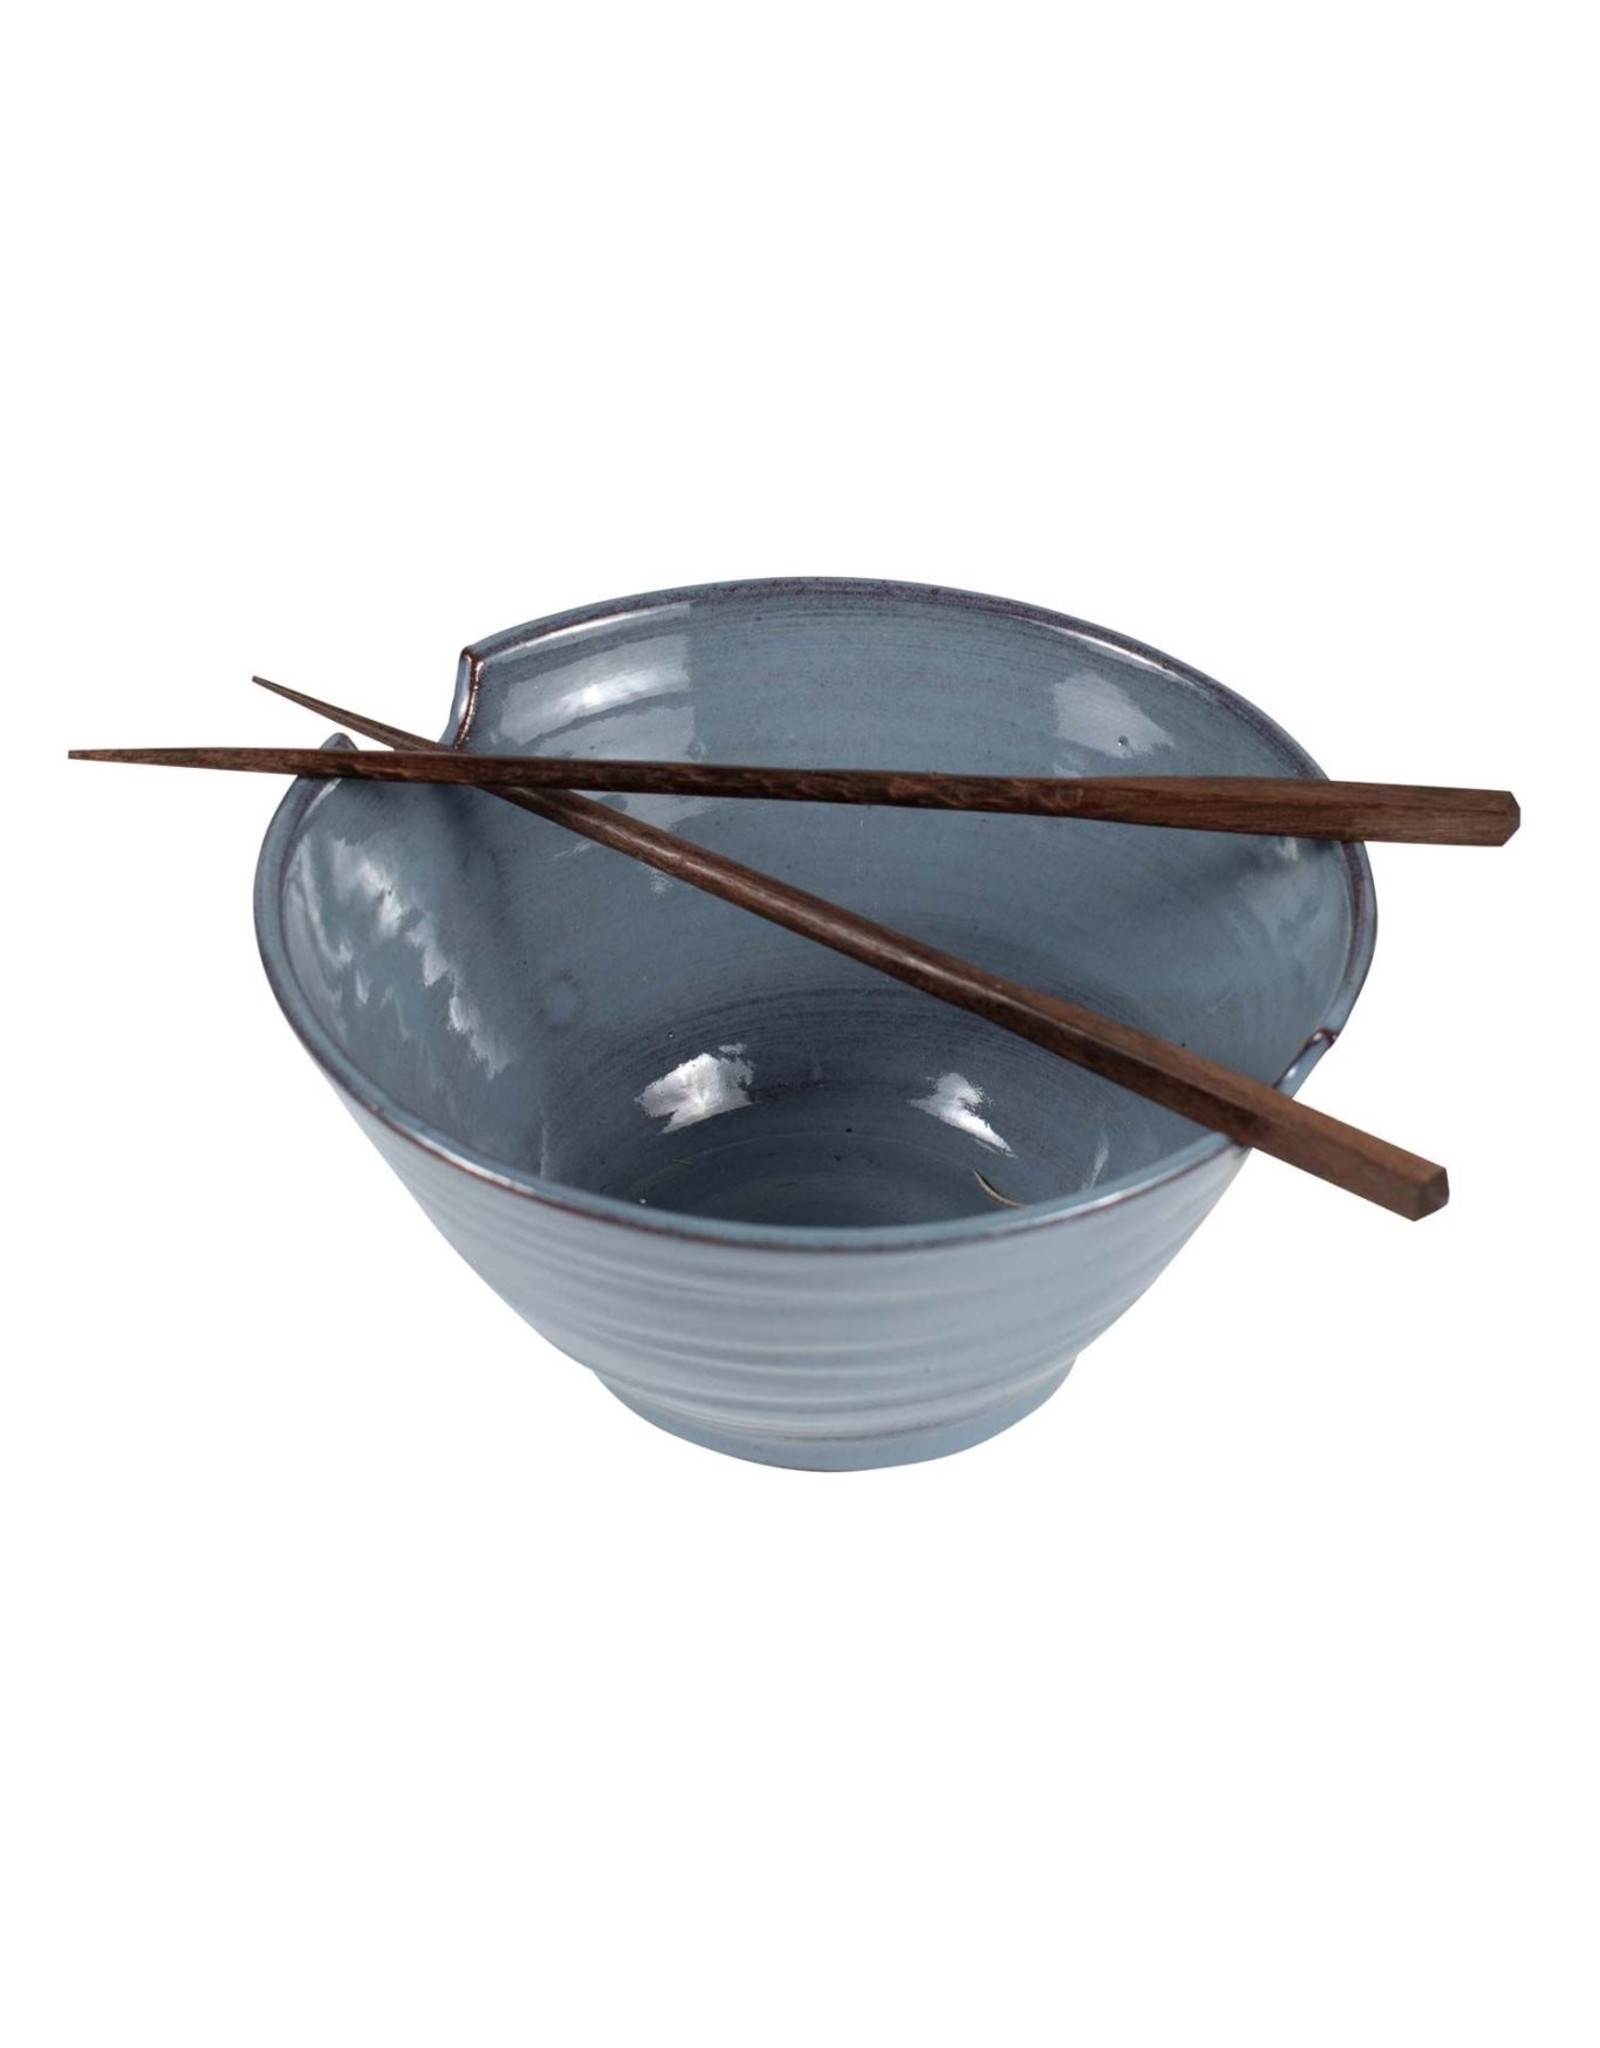 Ten Thousand Villages Chopsticks & Blue Bowl Set